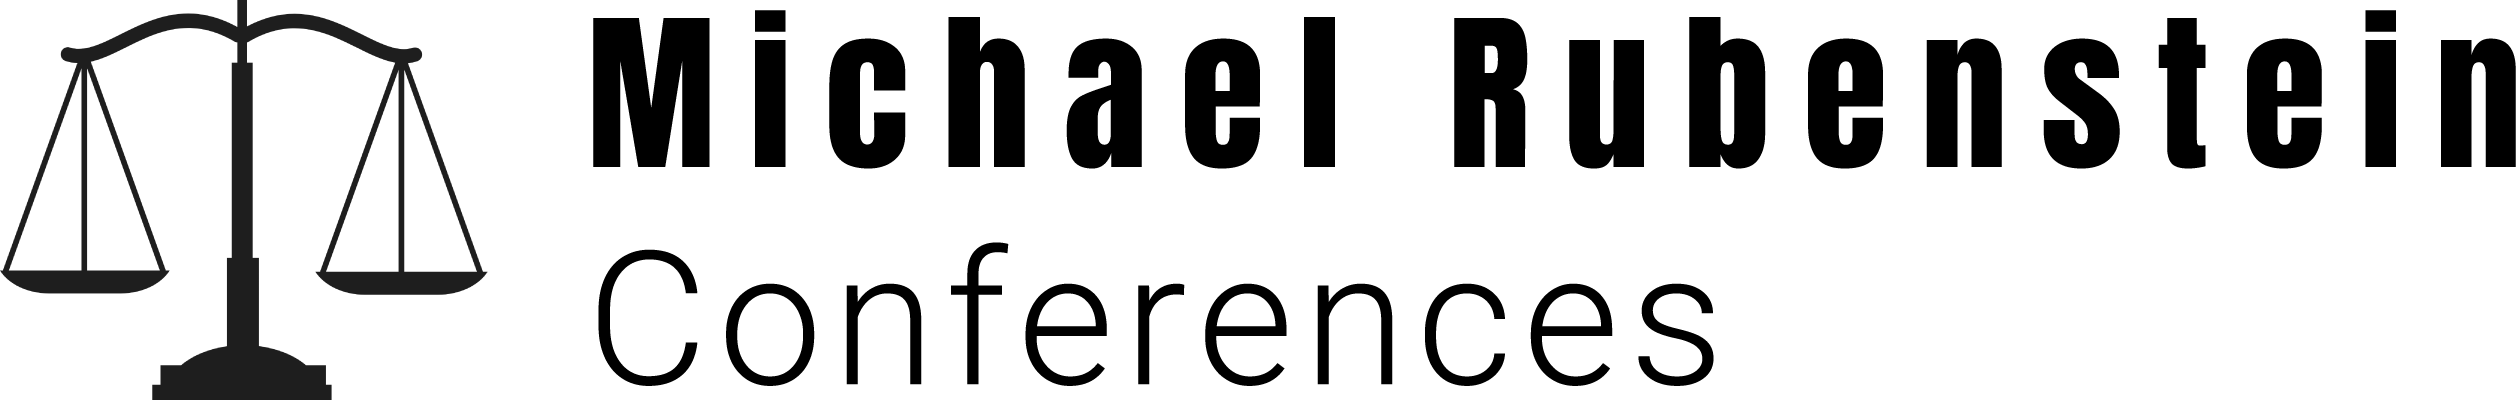 Michael Rubenstein Conferences logo